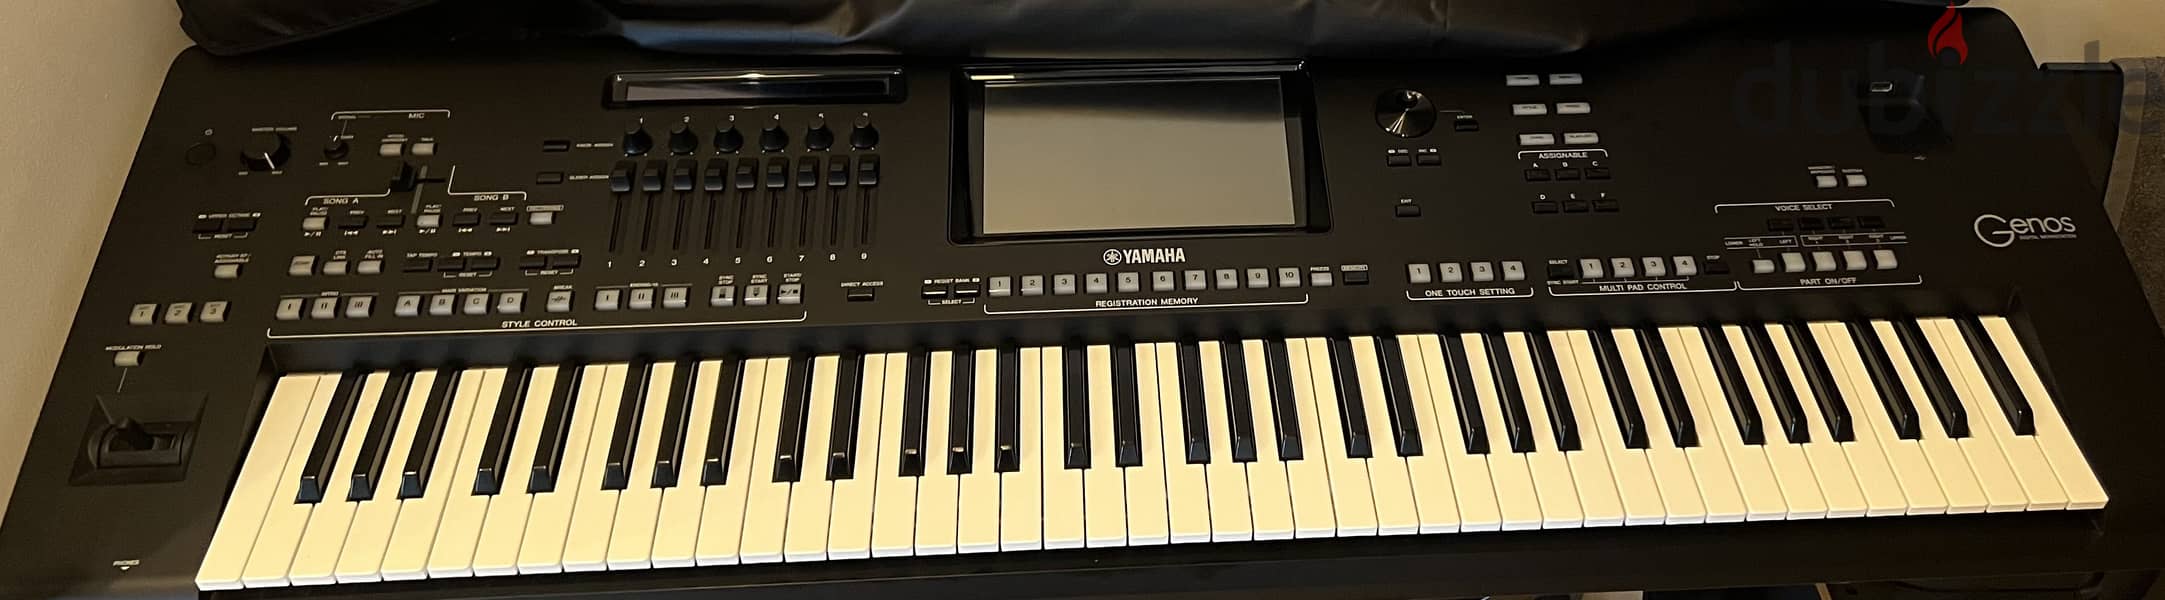 Yamaha Genos Keyboard Workstation 0